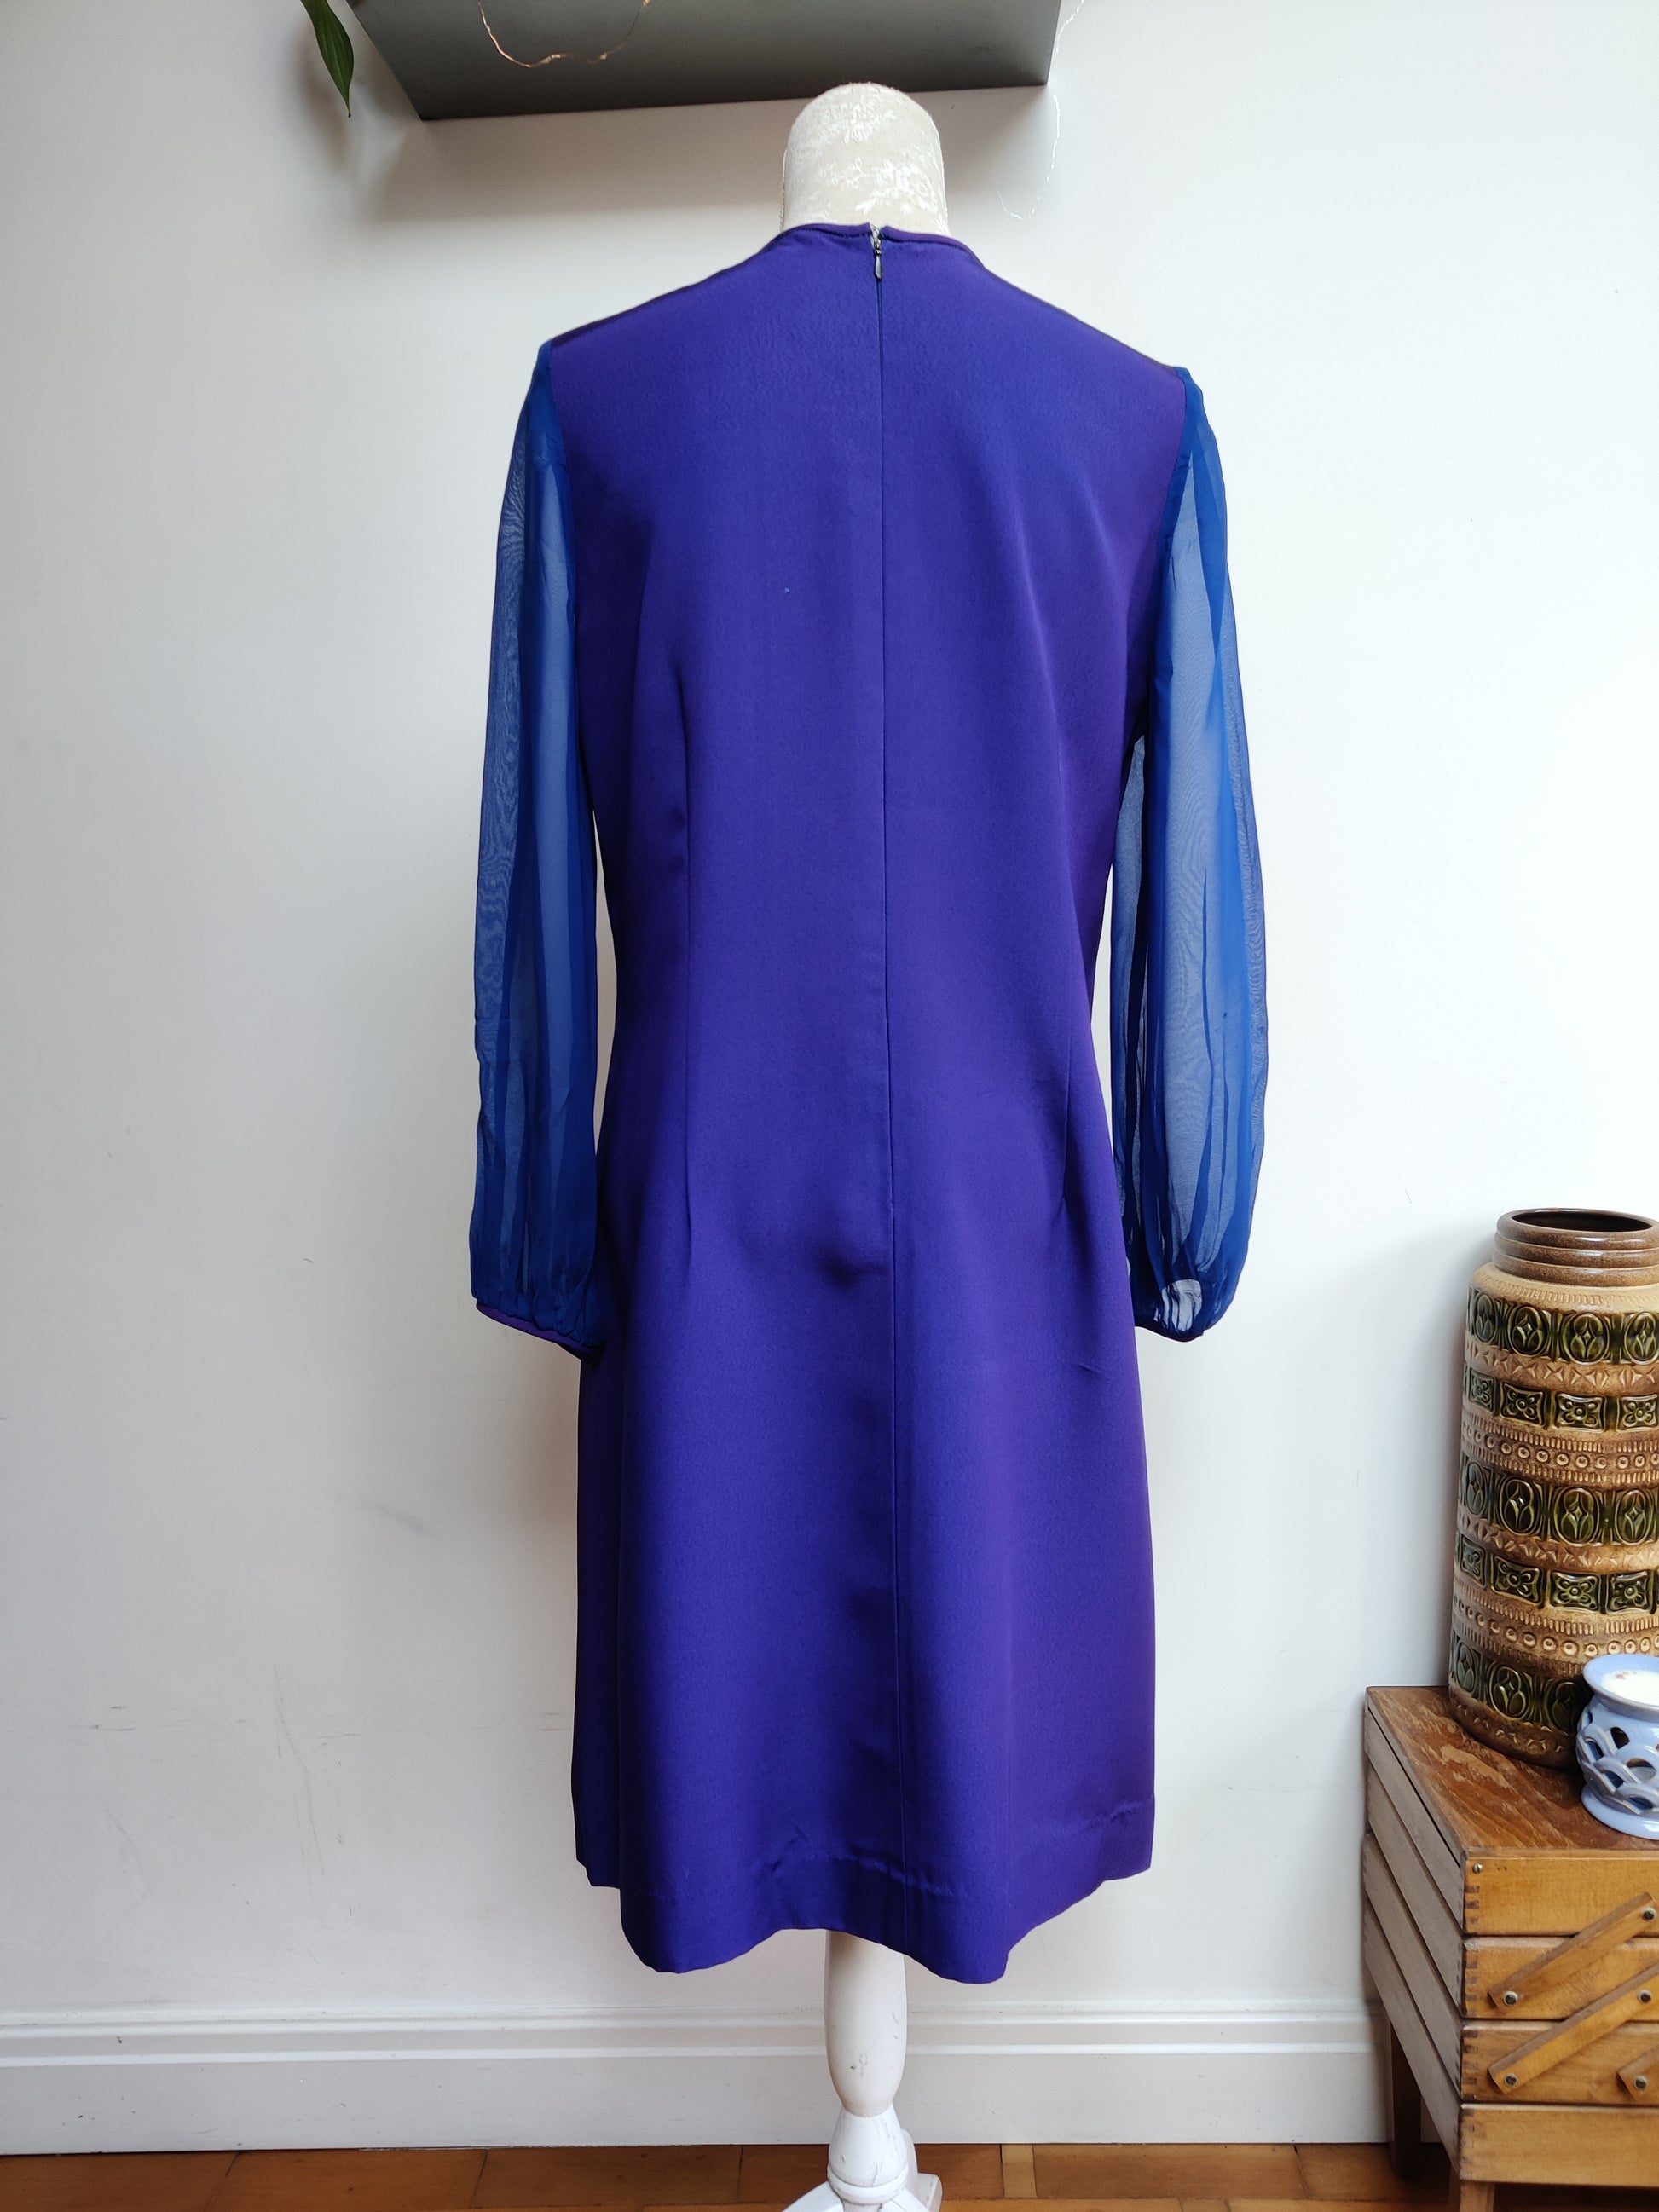 Amazing purple vintage mod dress